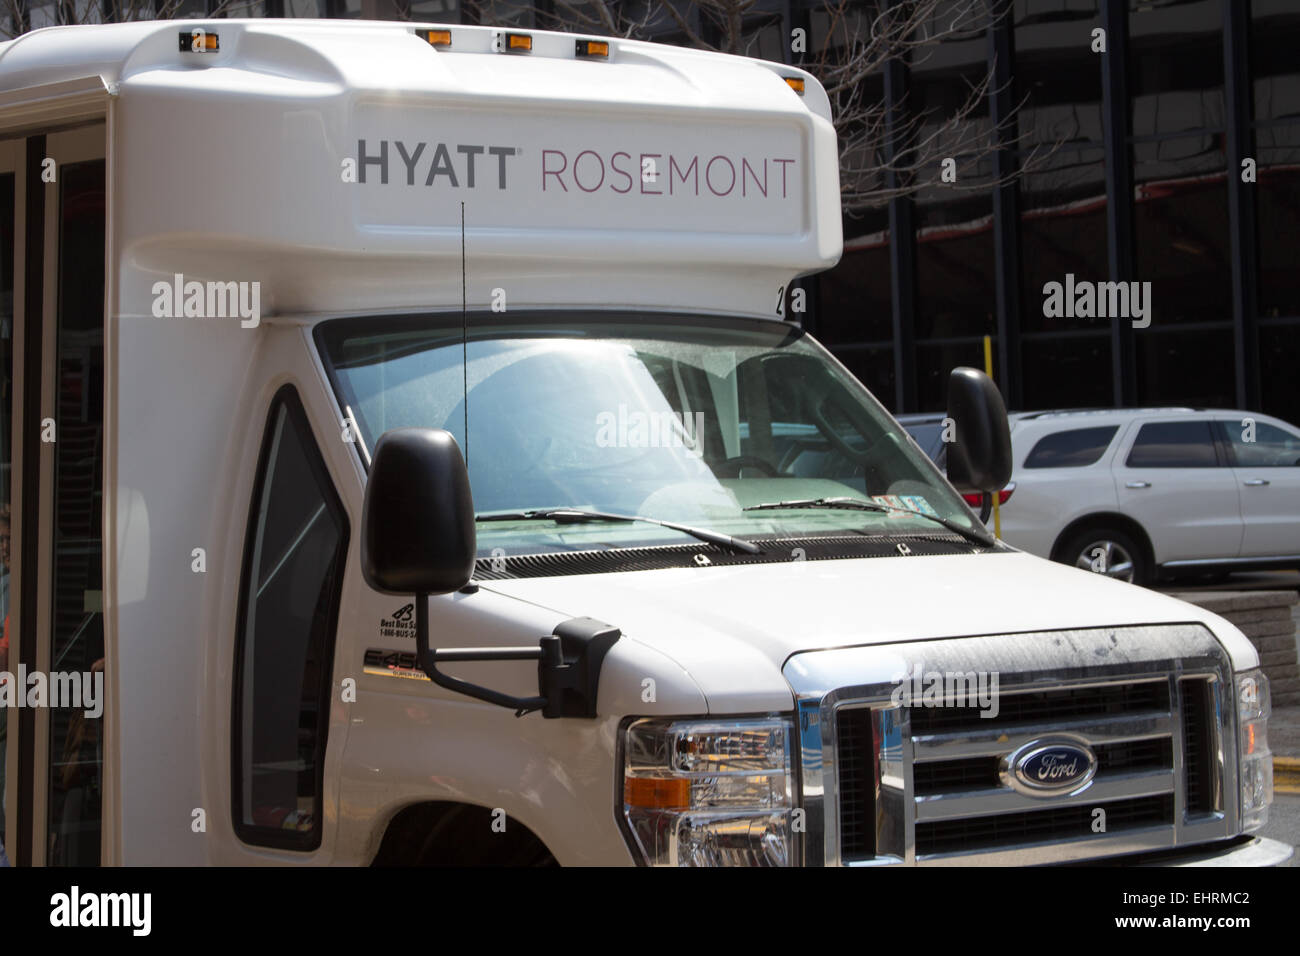 Hyatt Rosemont hotel shuttle bus at Chicago O'Hare International airport, Rosemont, Illinois, USA Stock Photo